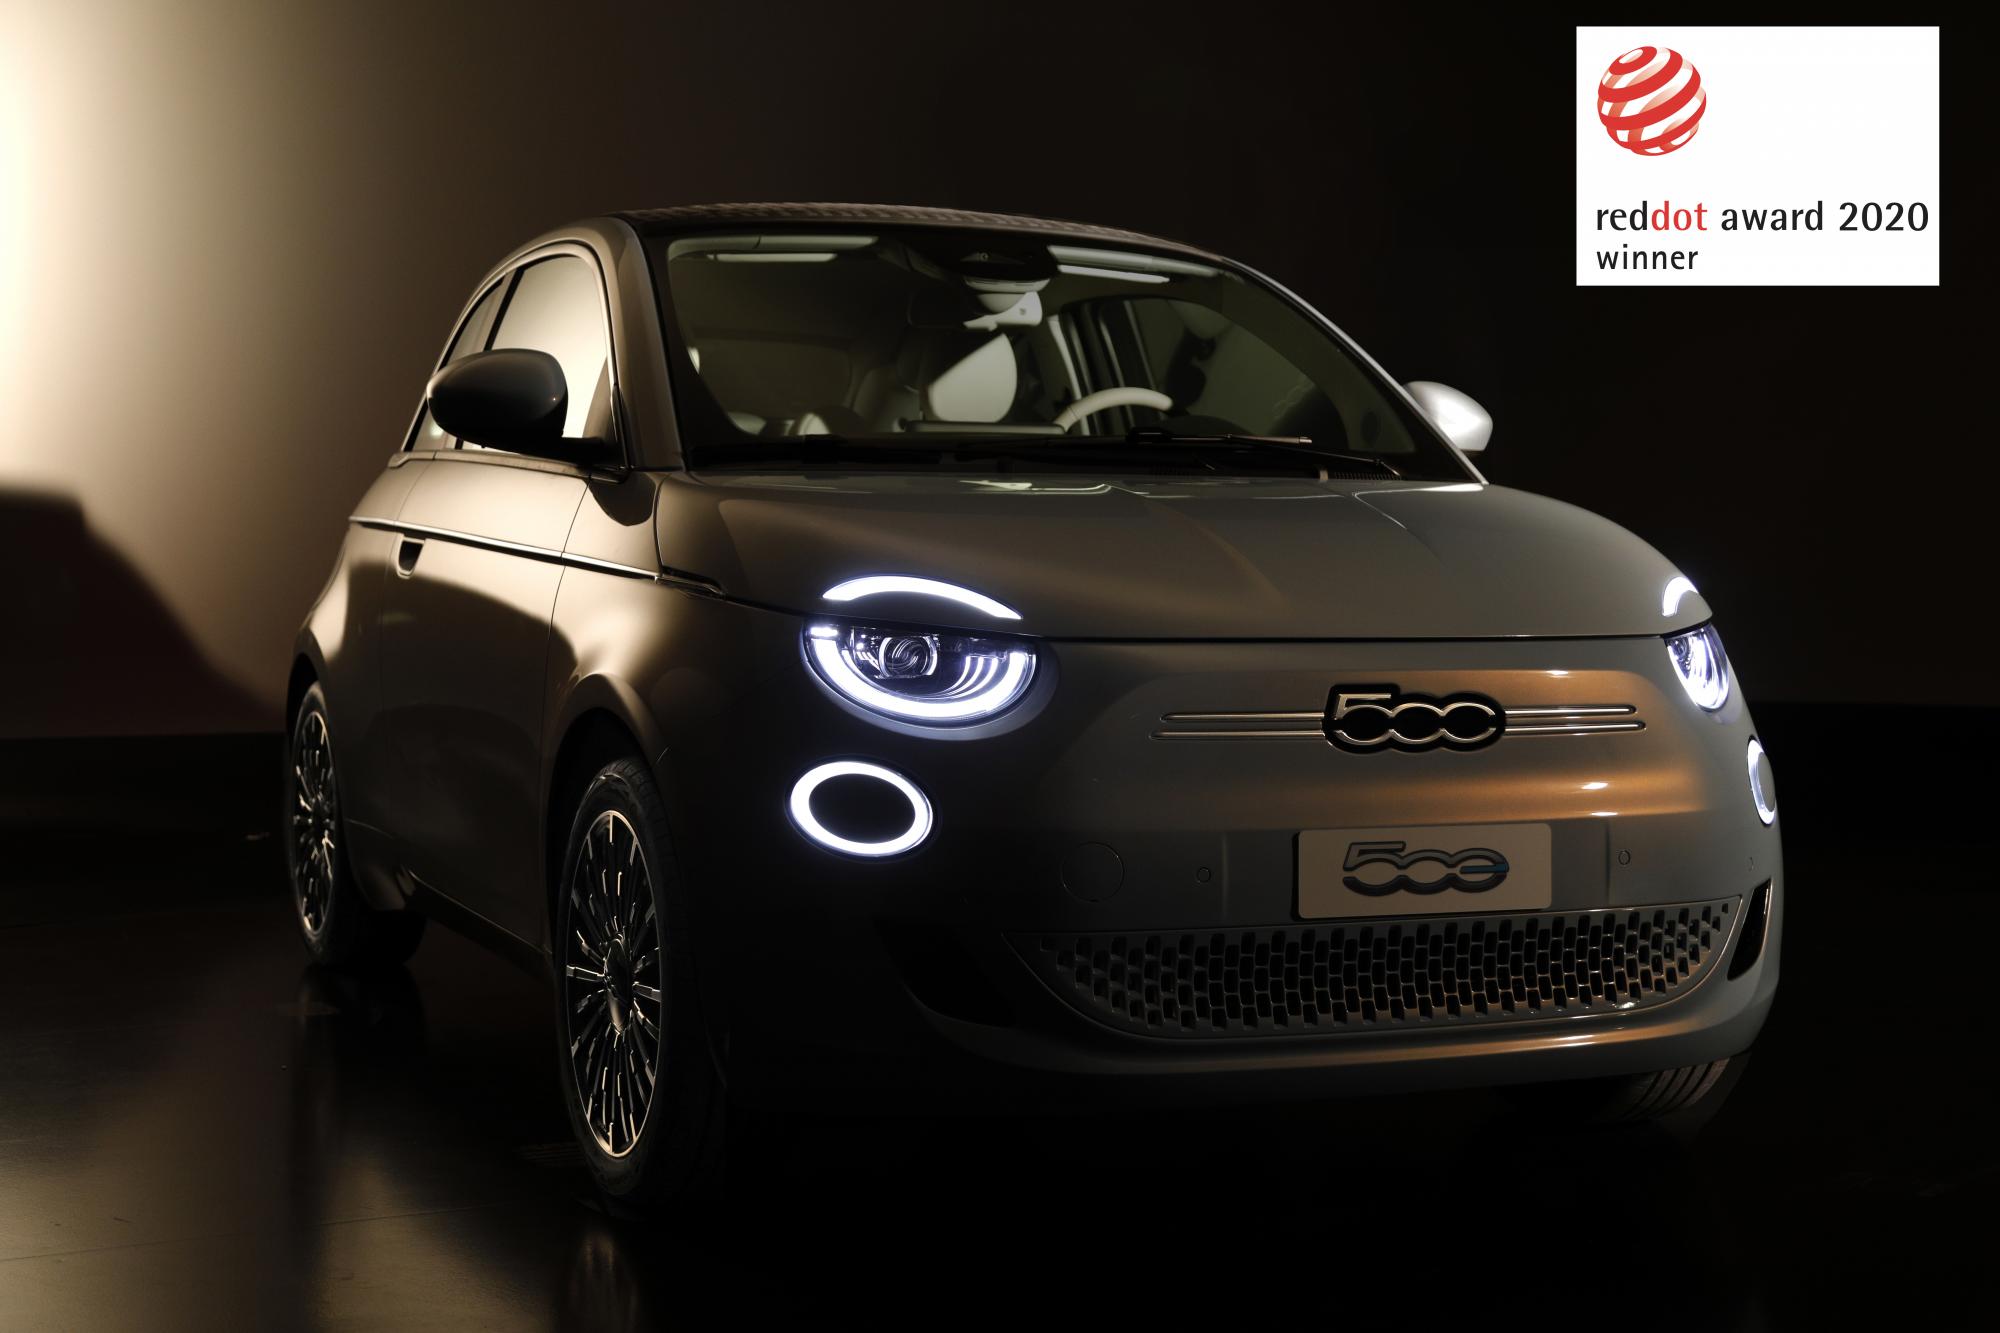 To νέο ηλεκτρικό Fiat 500 κατακτά το “Red Dot Award 2020”